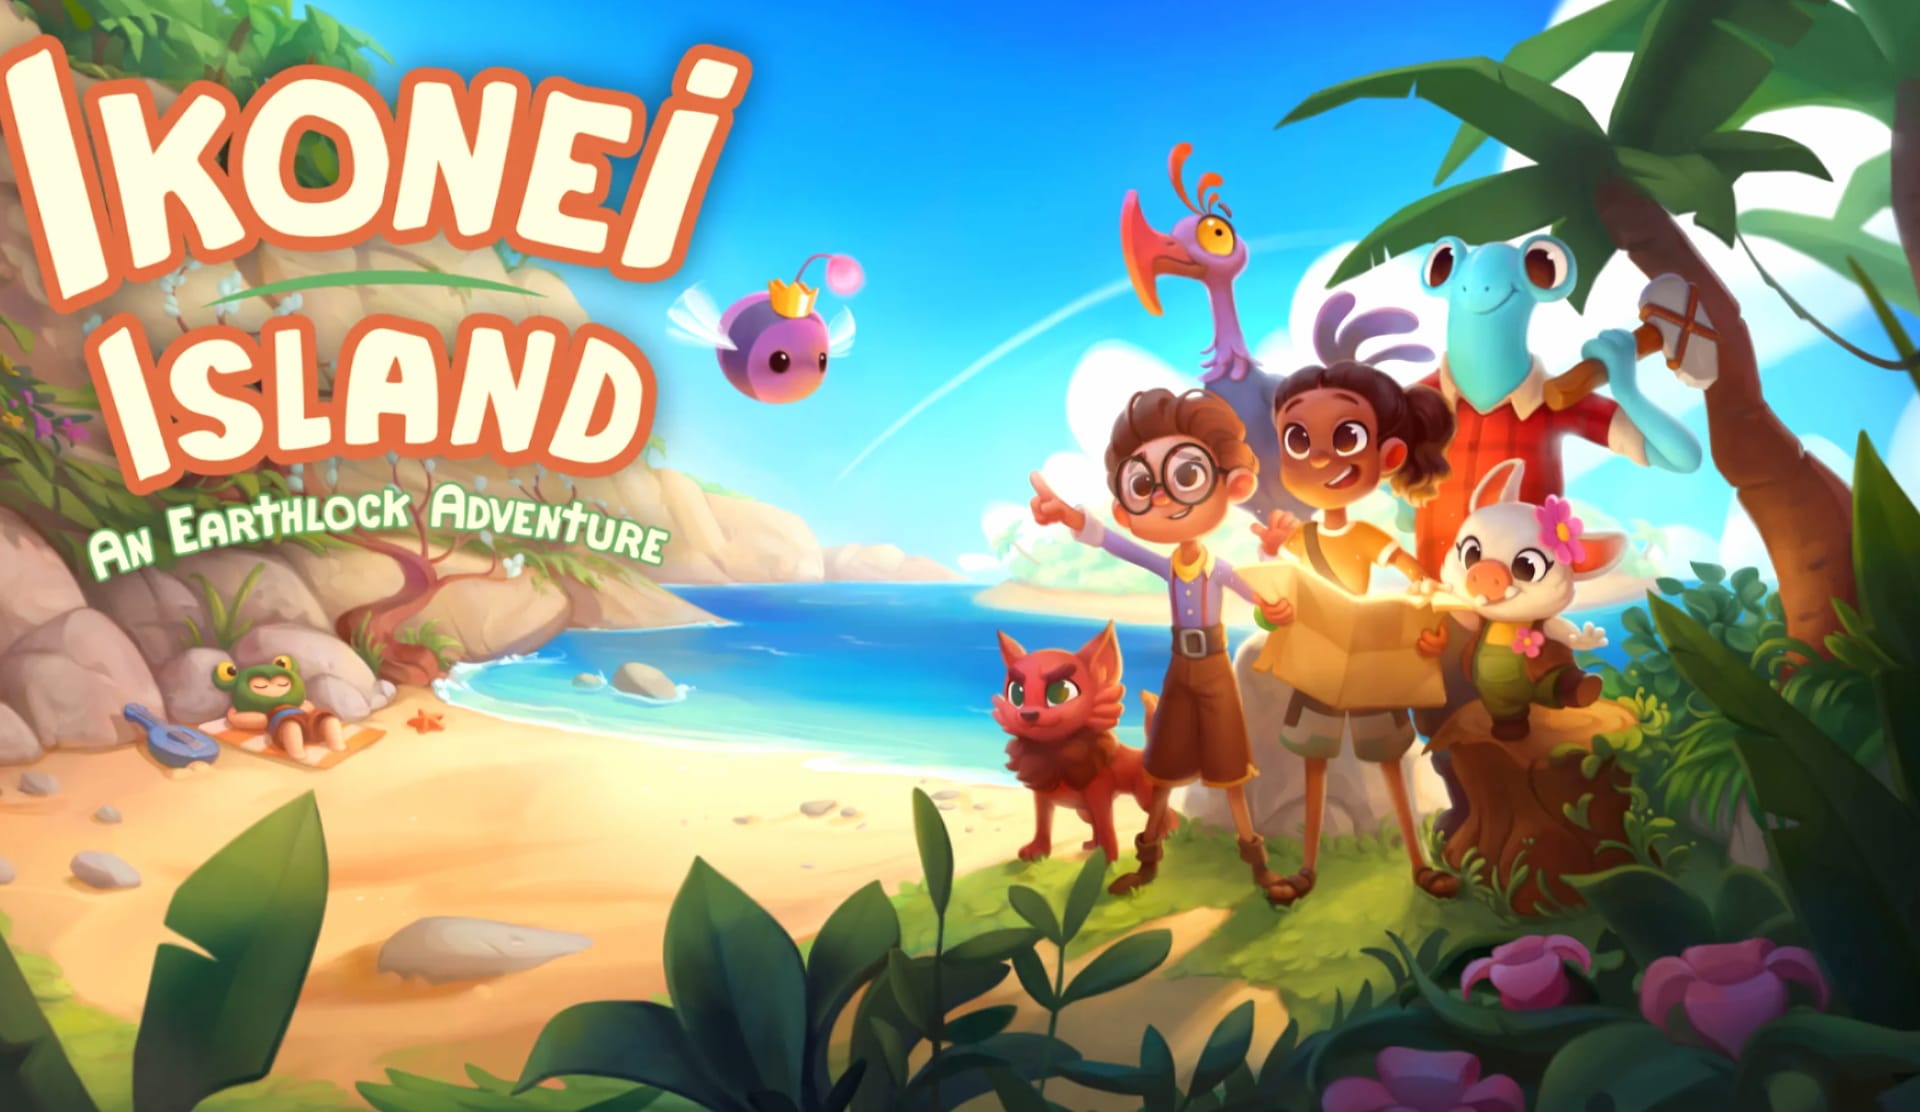 Ikonei Island An Earthlock Adventure at 2048 x 2048 iPad size wallpapers HD quality